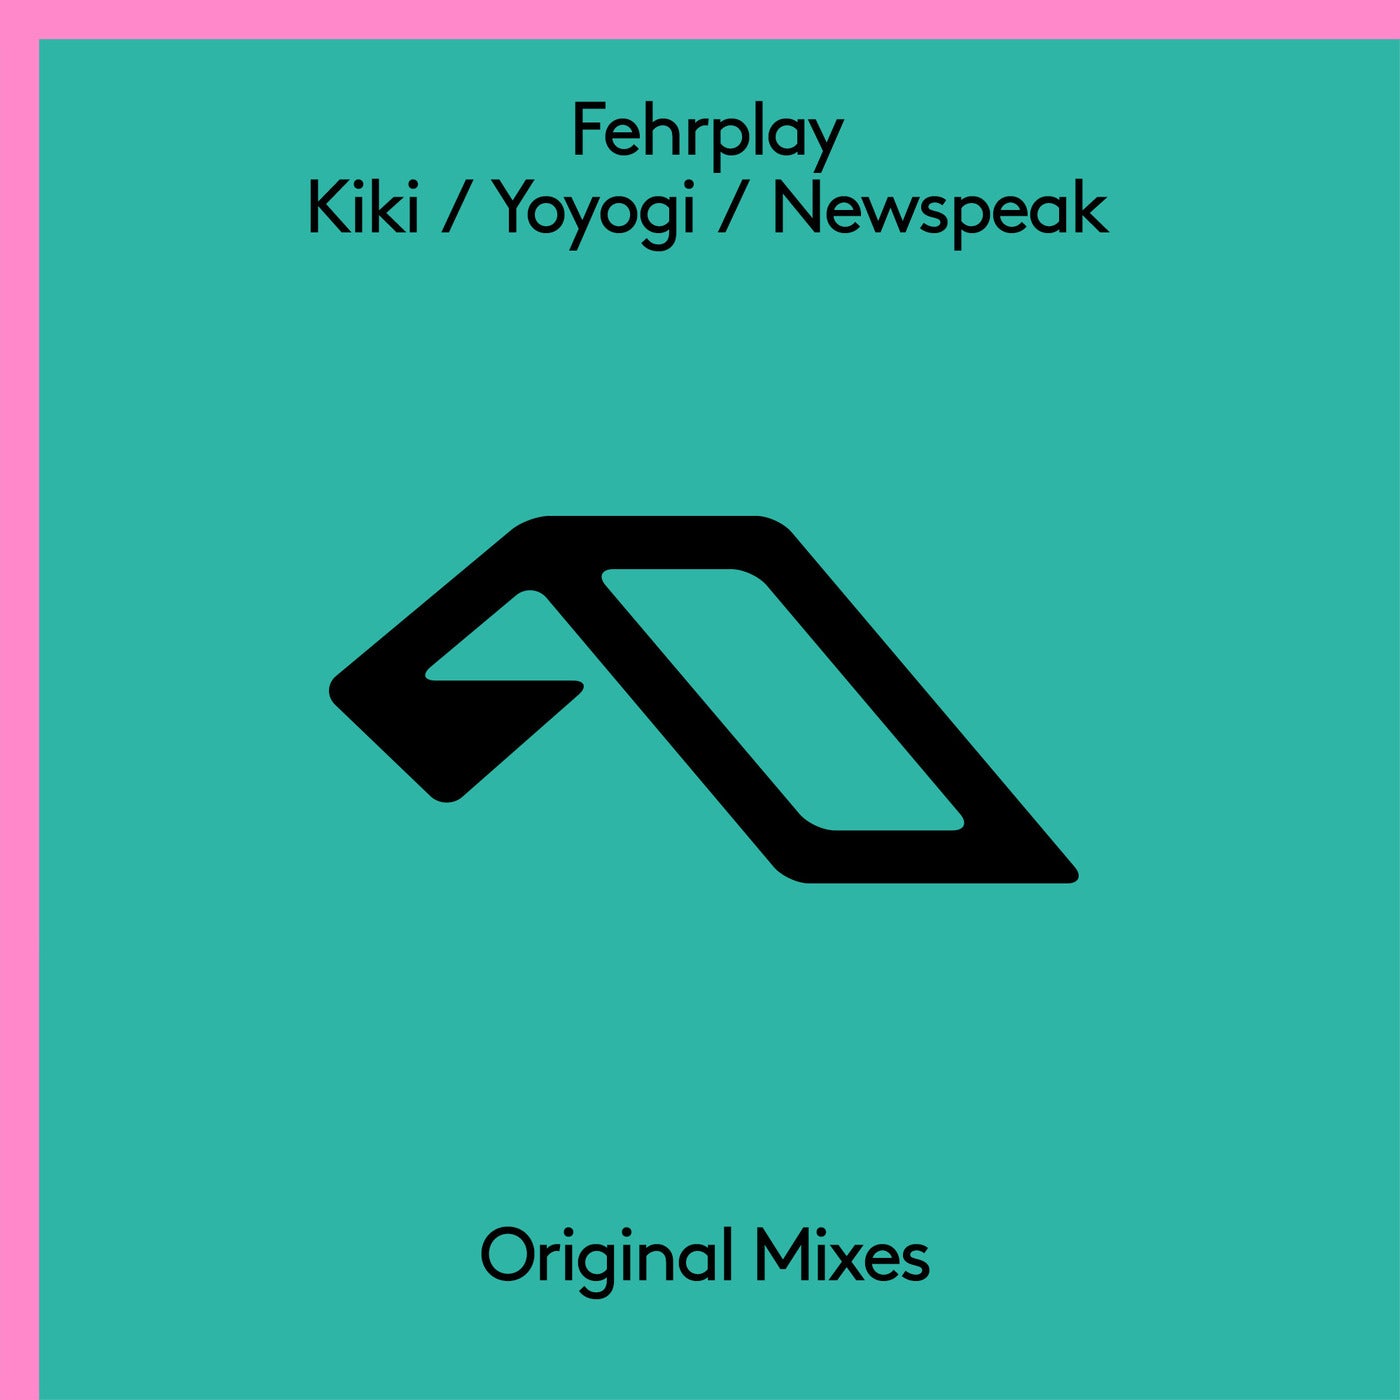 Download Fehrplay - Kiki / Yoyogi / Newspeak on Electrobuzz